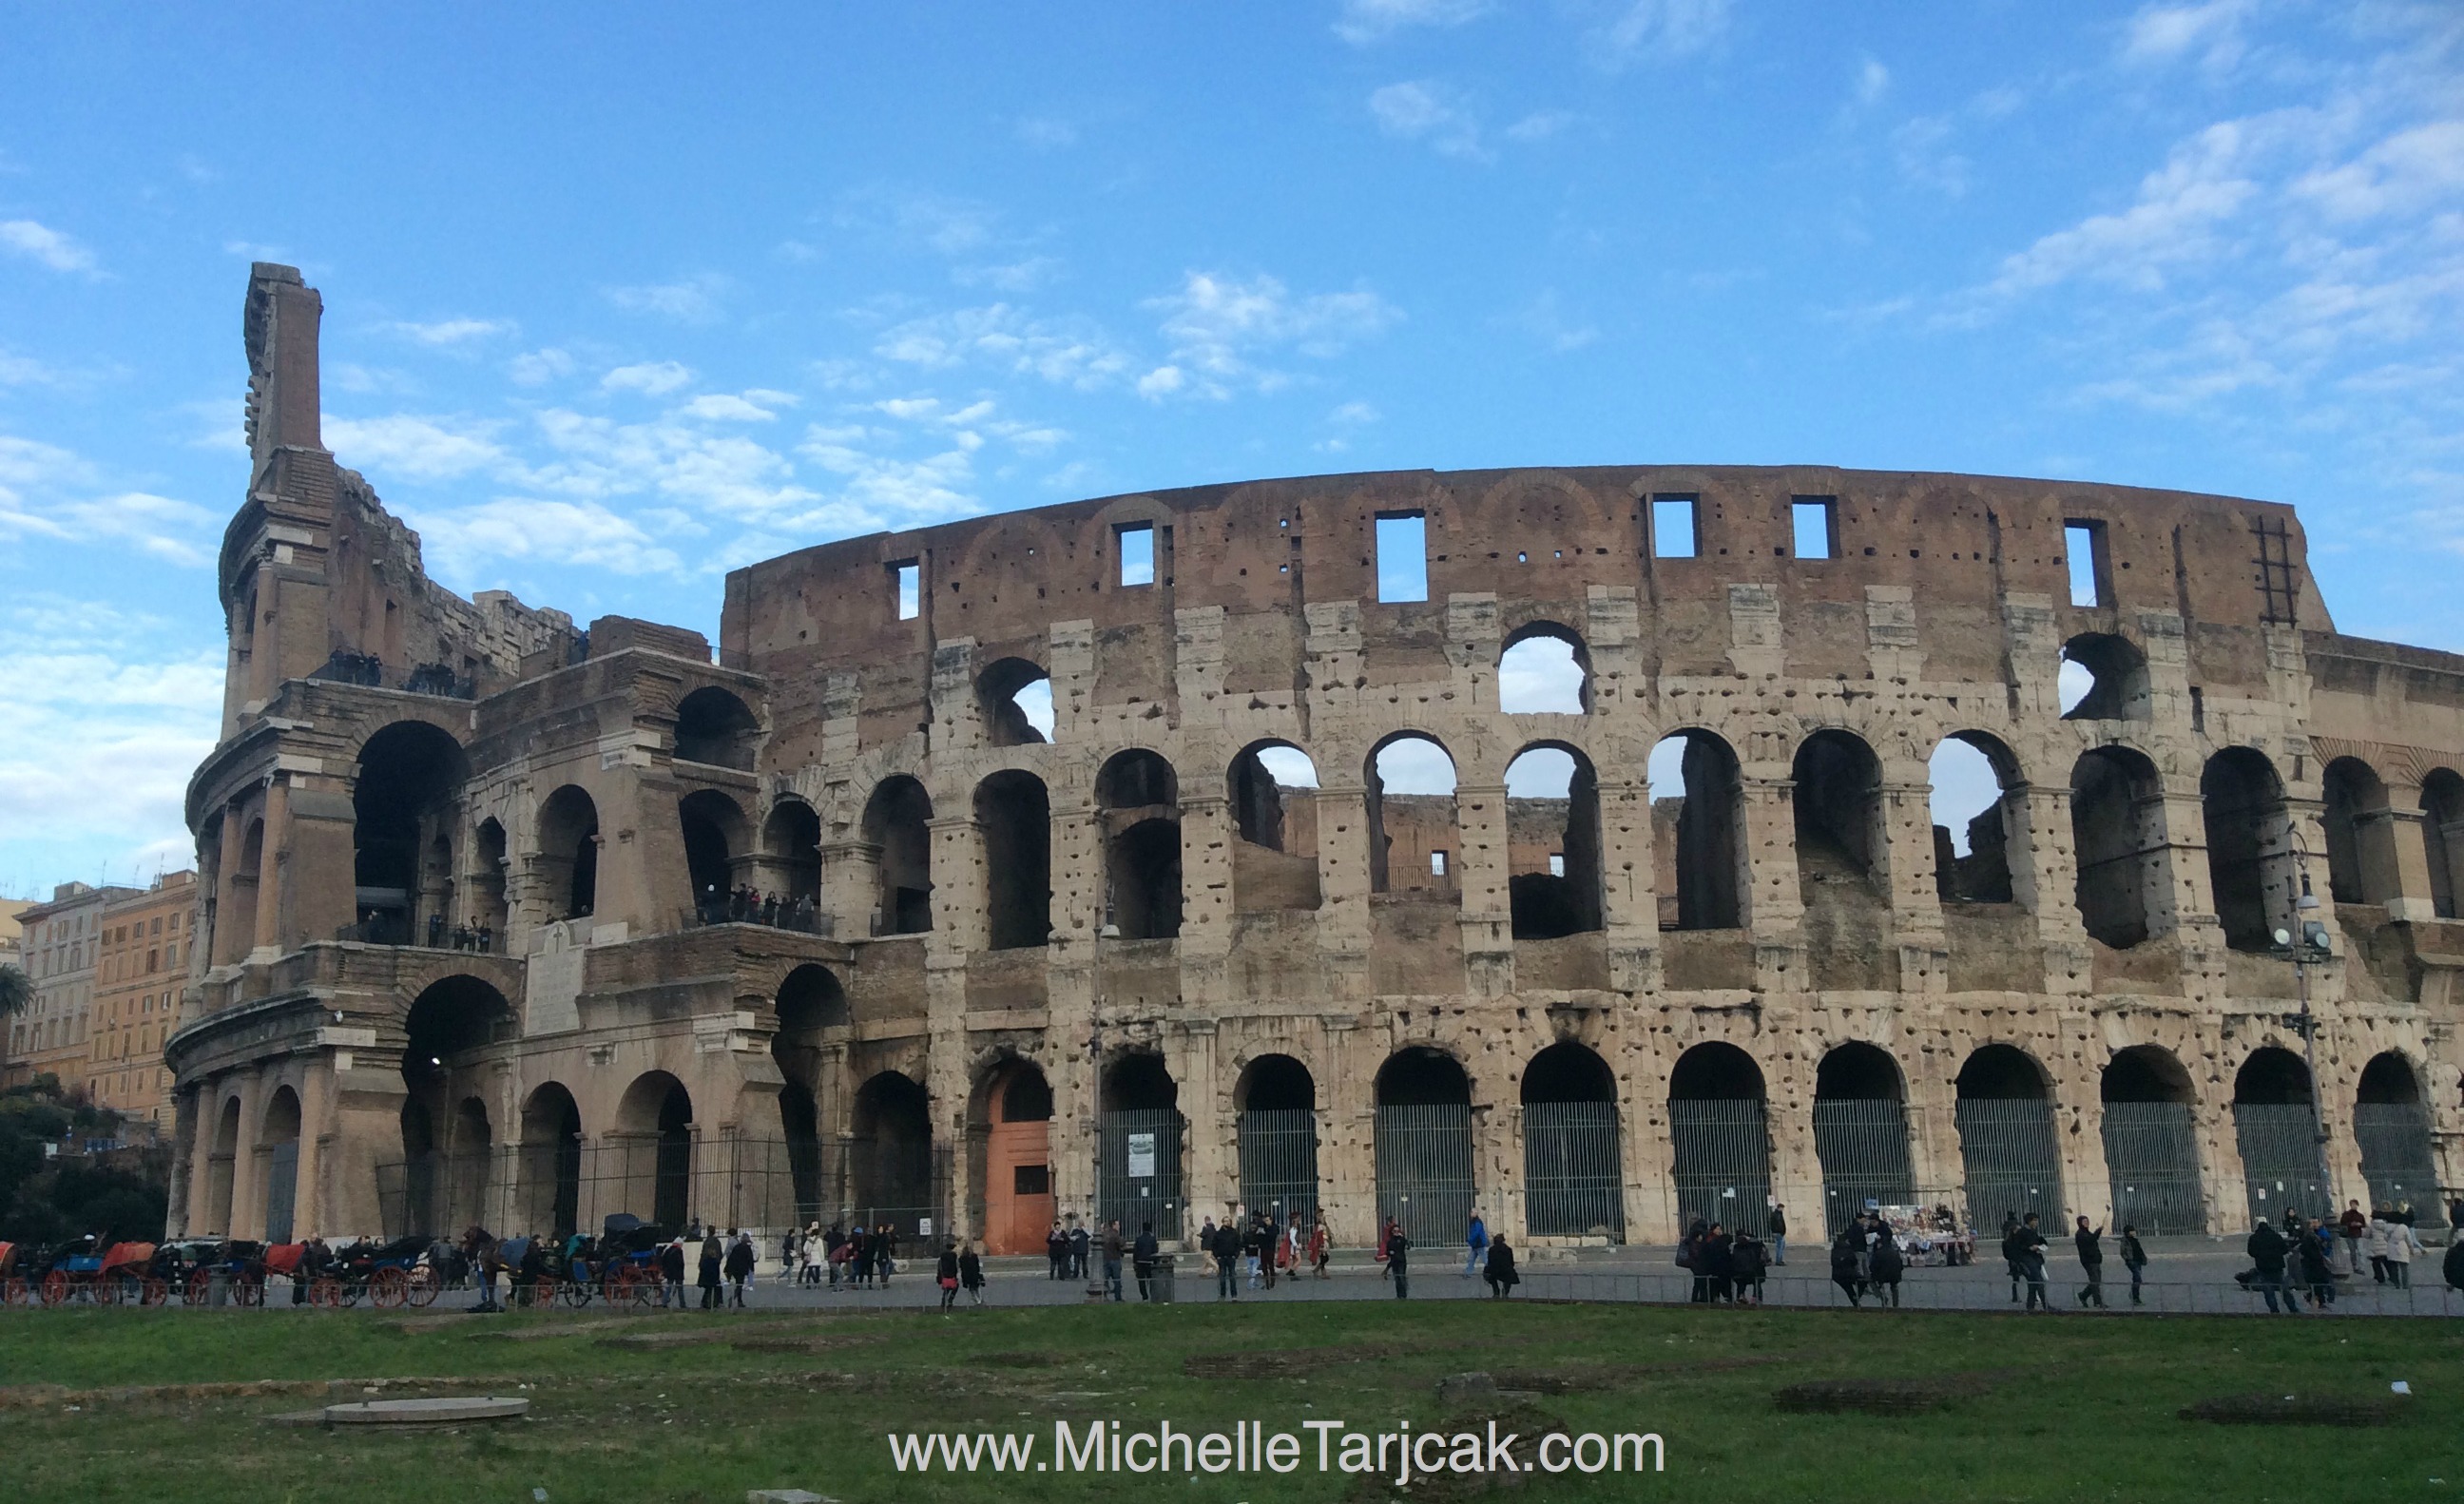 Getting Motivated At The Coliseum – Michelle Tarajcak